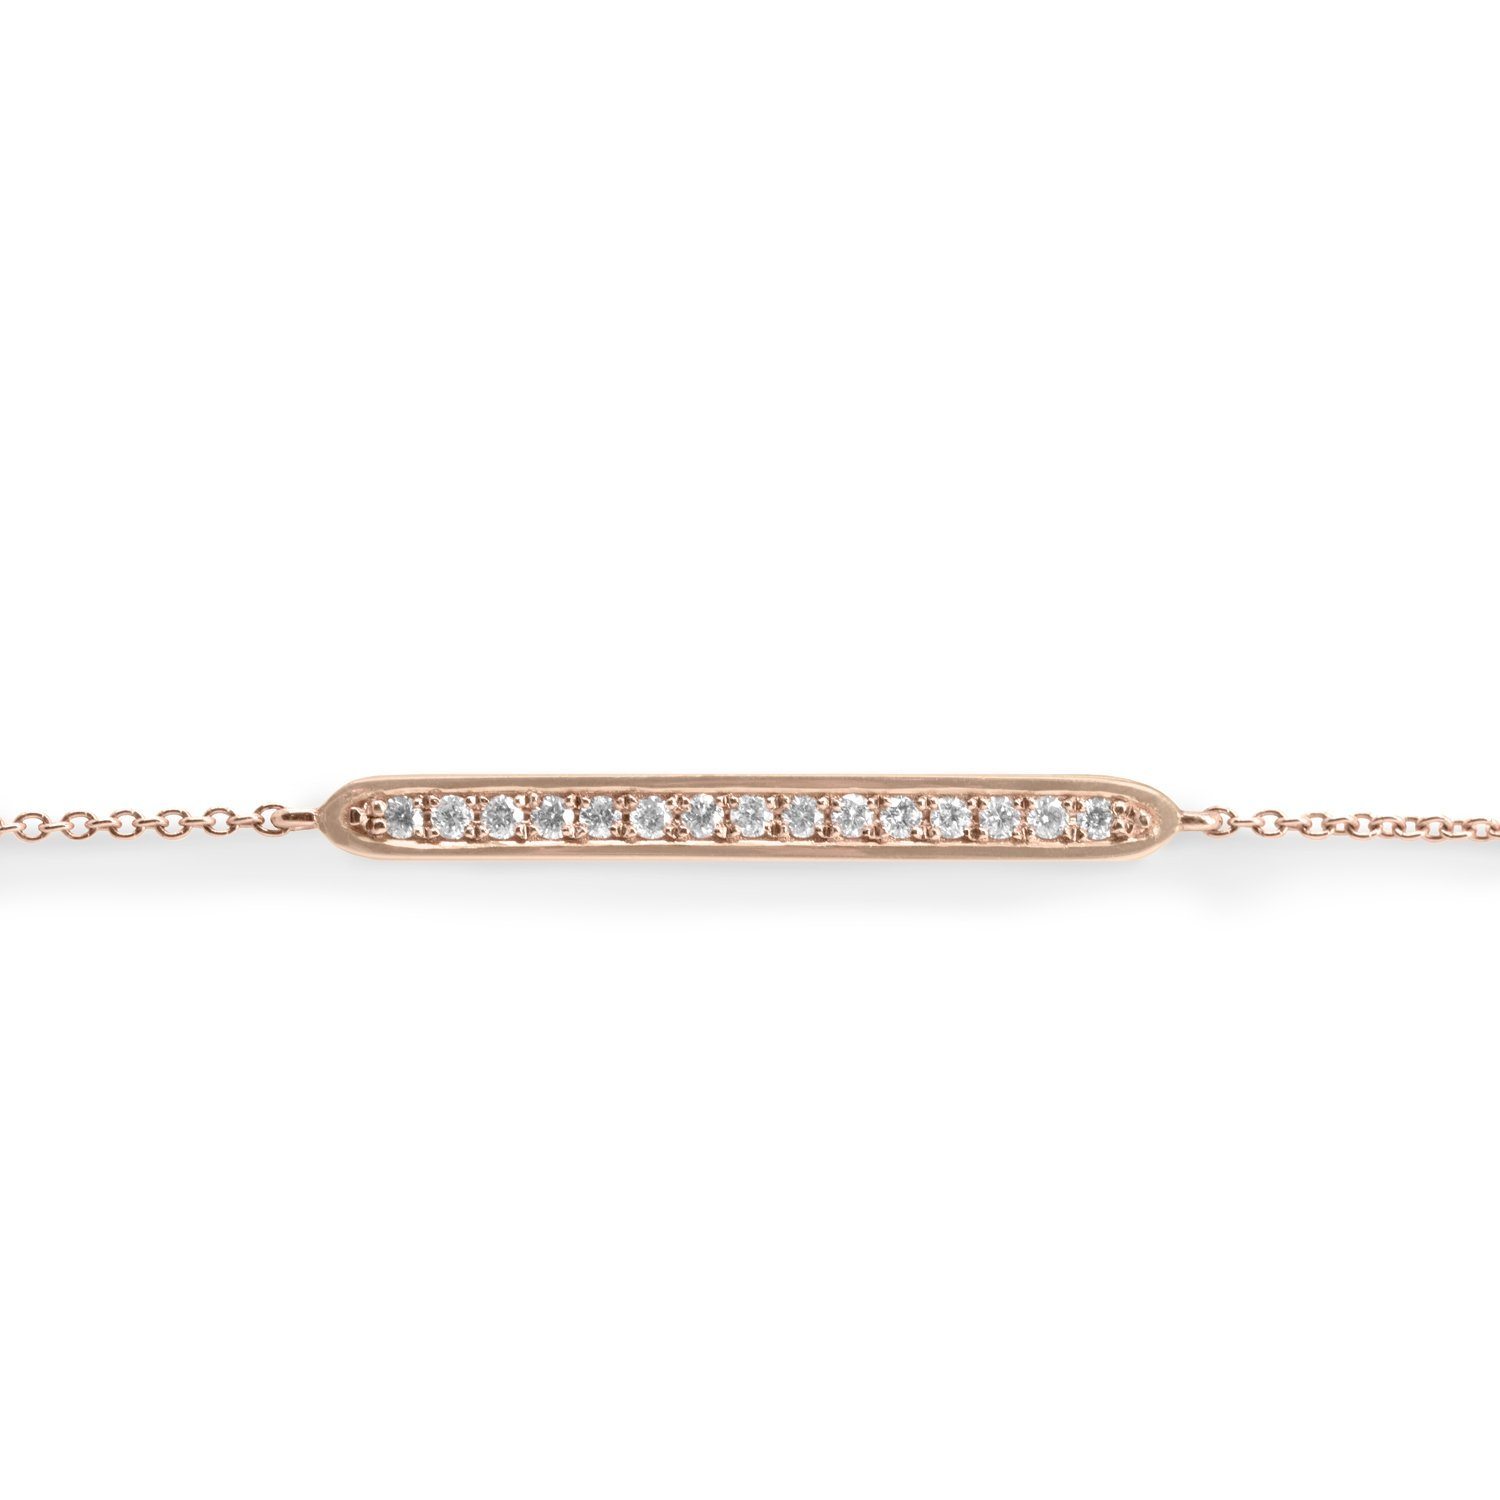 rose gold bracelet with 15 diamonds